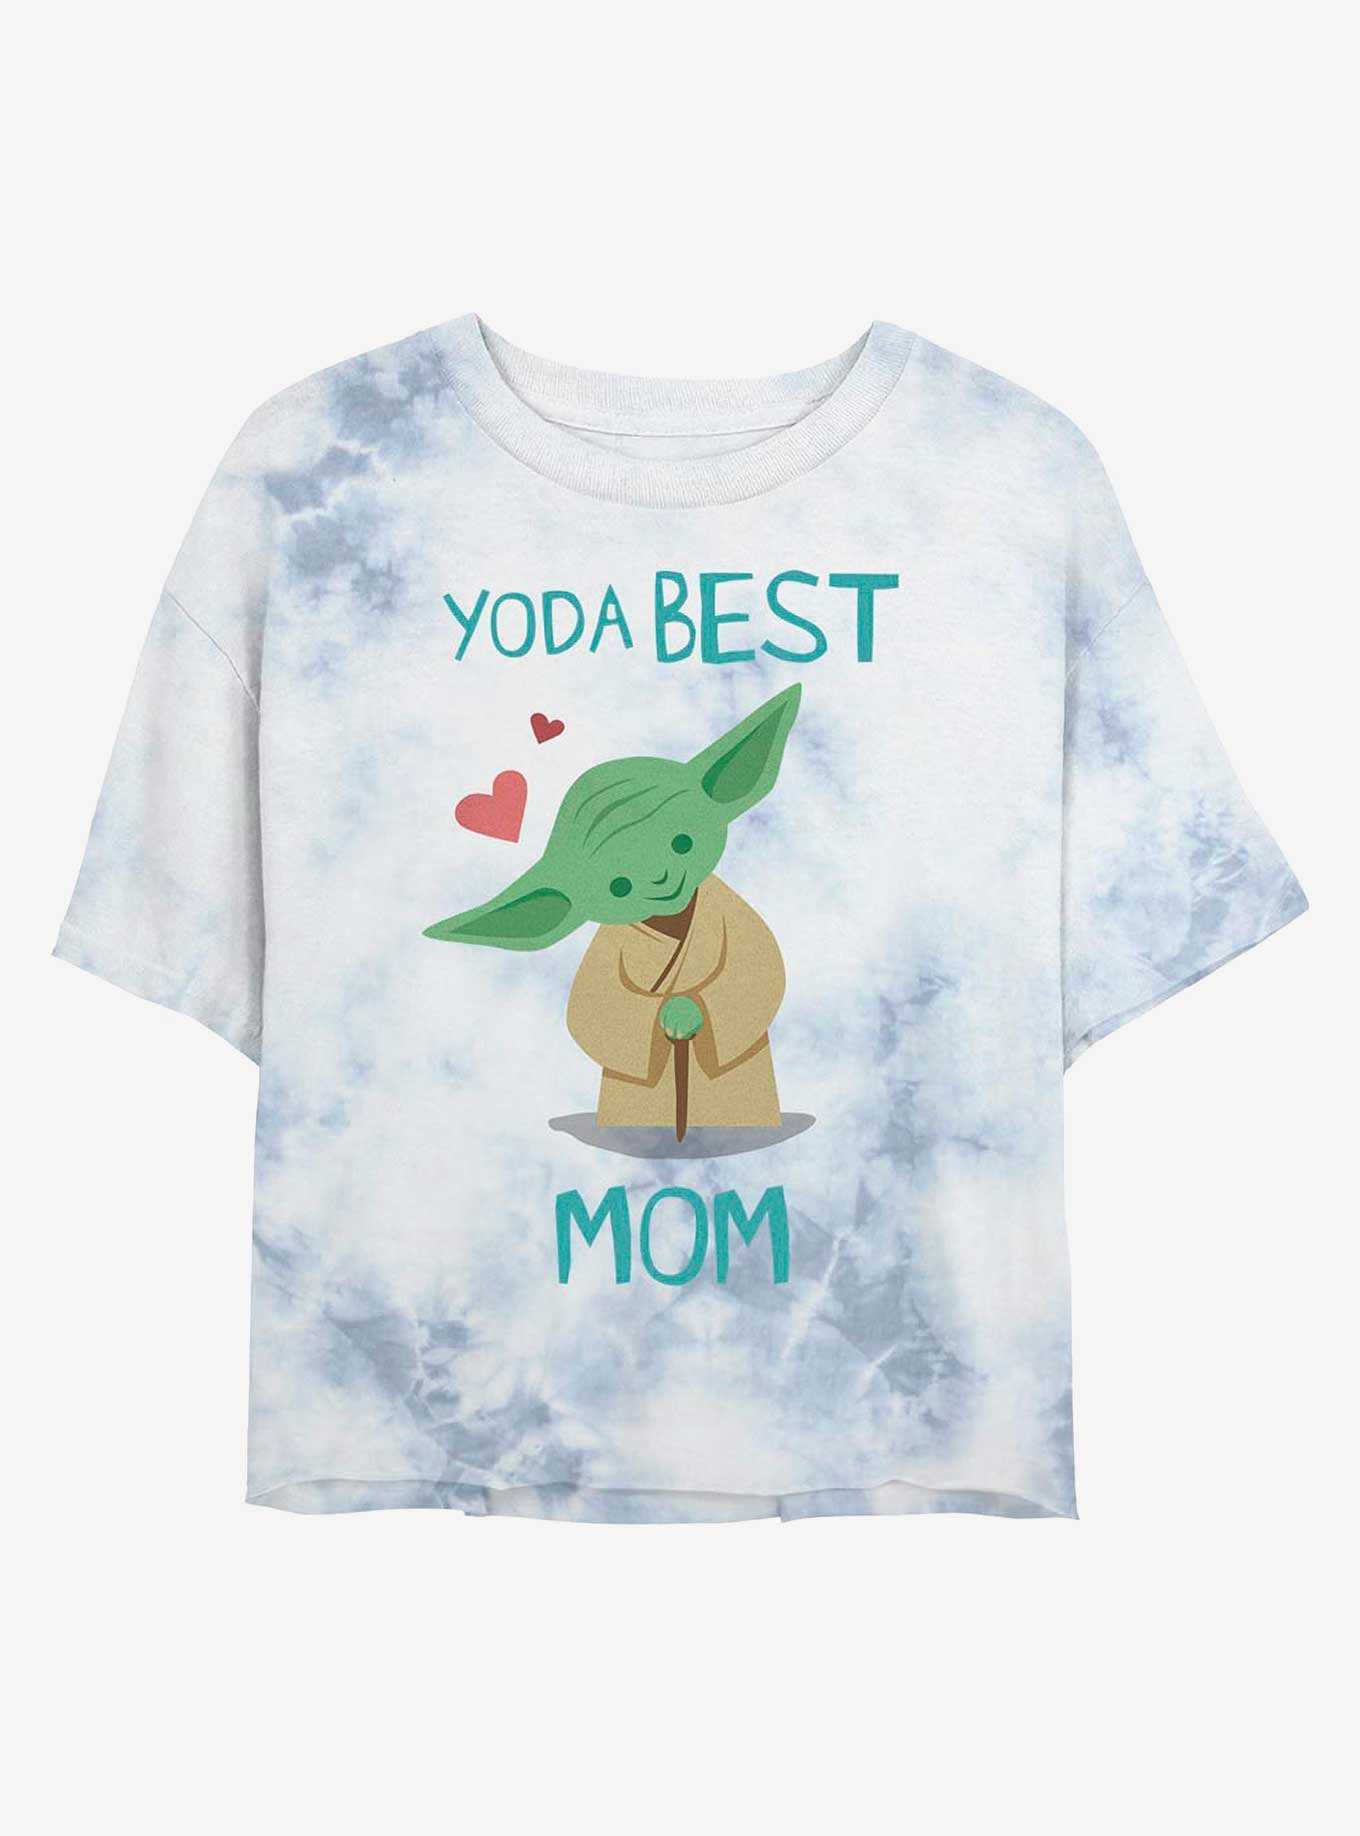 Star Wars Yoda Best Mom Hearts Tie-Dye Womens Crop T-Shirt, , hi-res